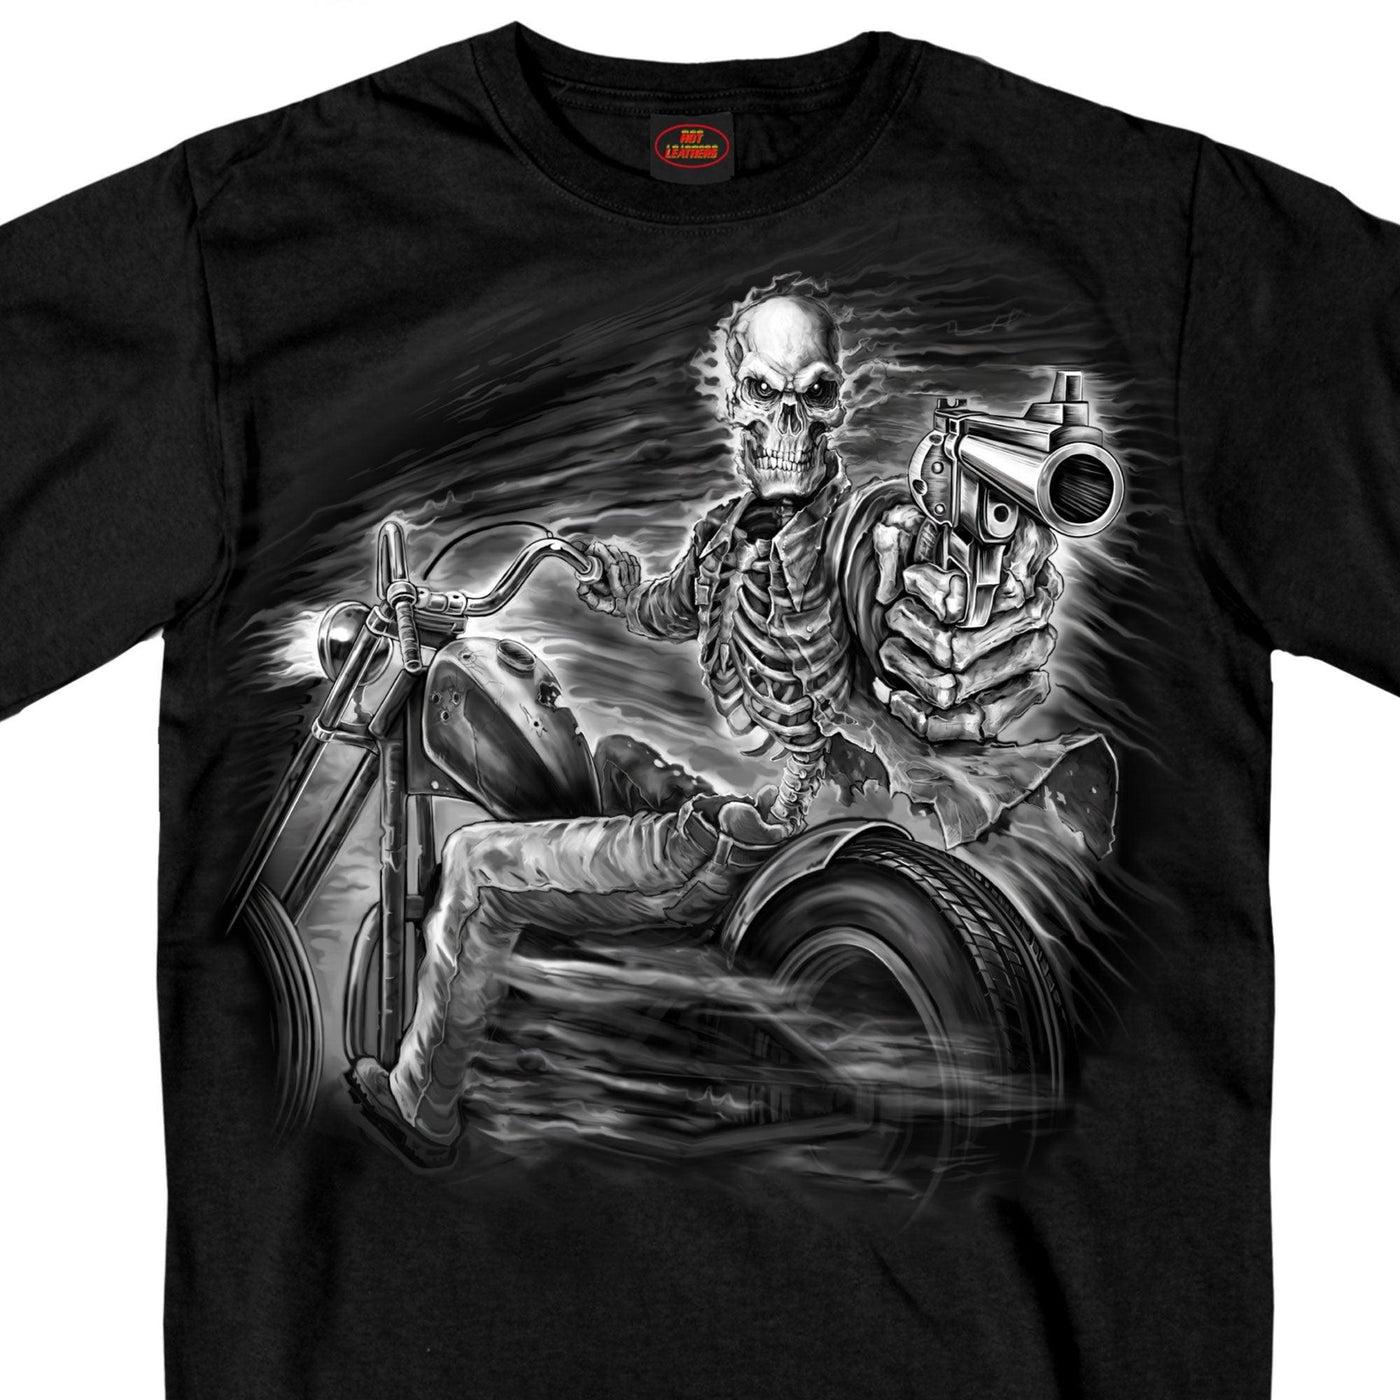 Hot Leathers Men's Assassin Rider T-Shirt, Black - American Legend Rider